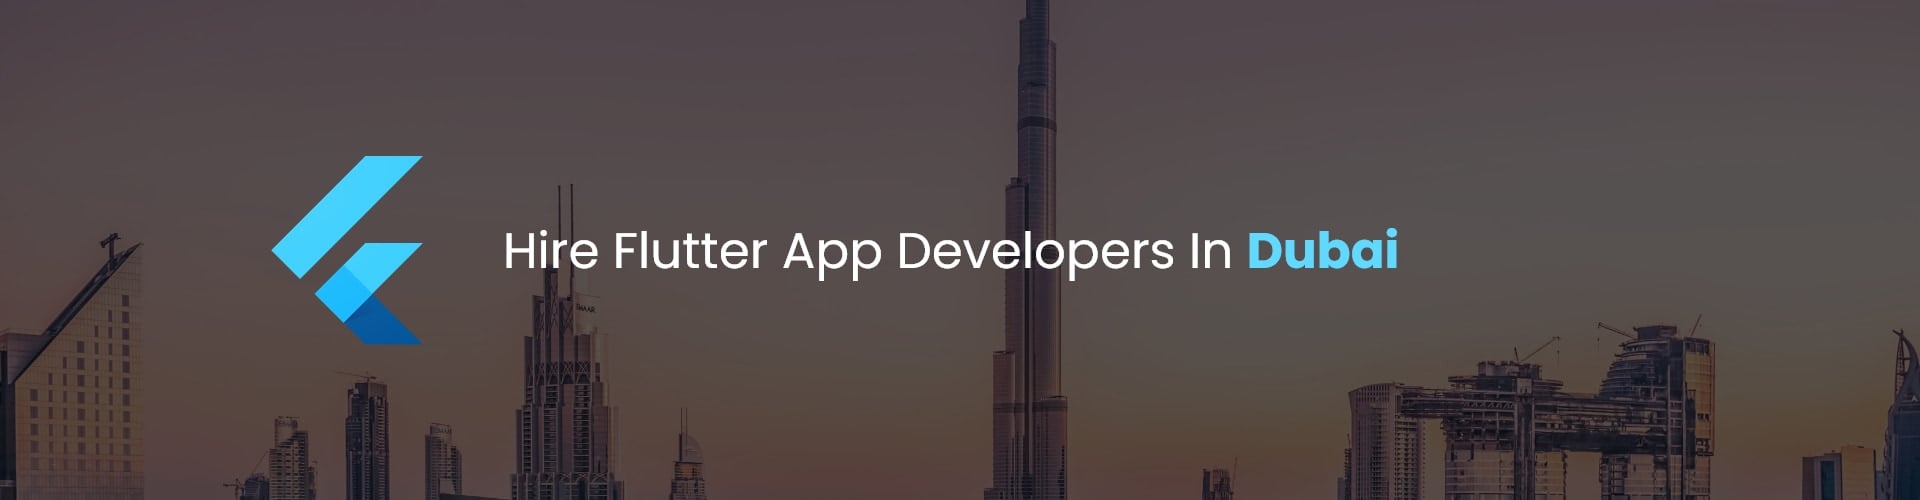 hire flutter app developers in dubai